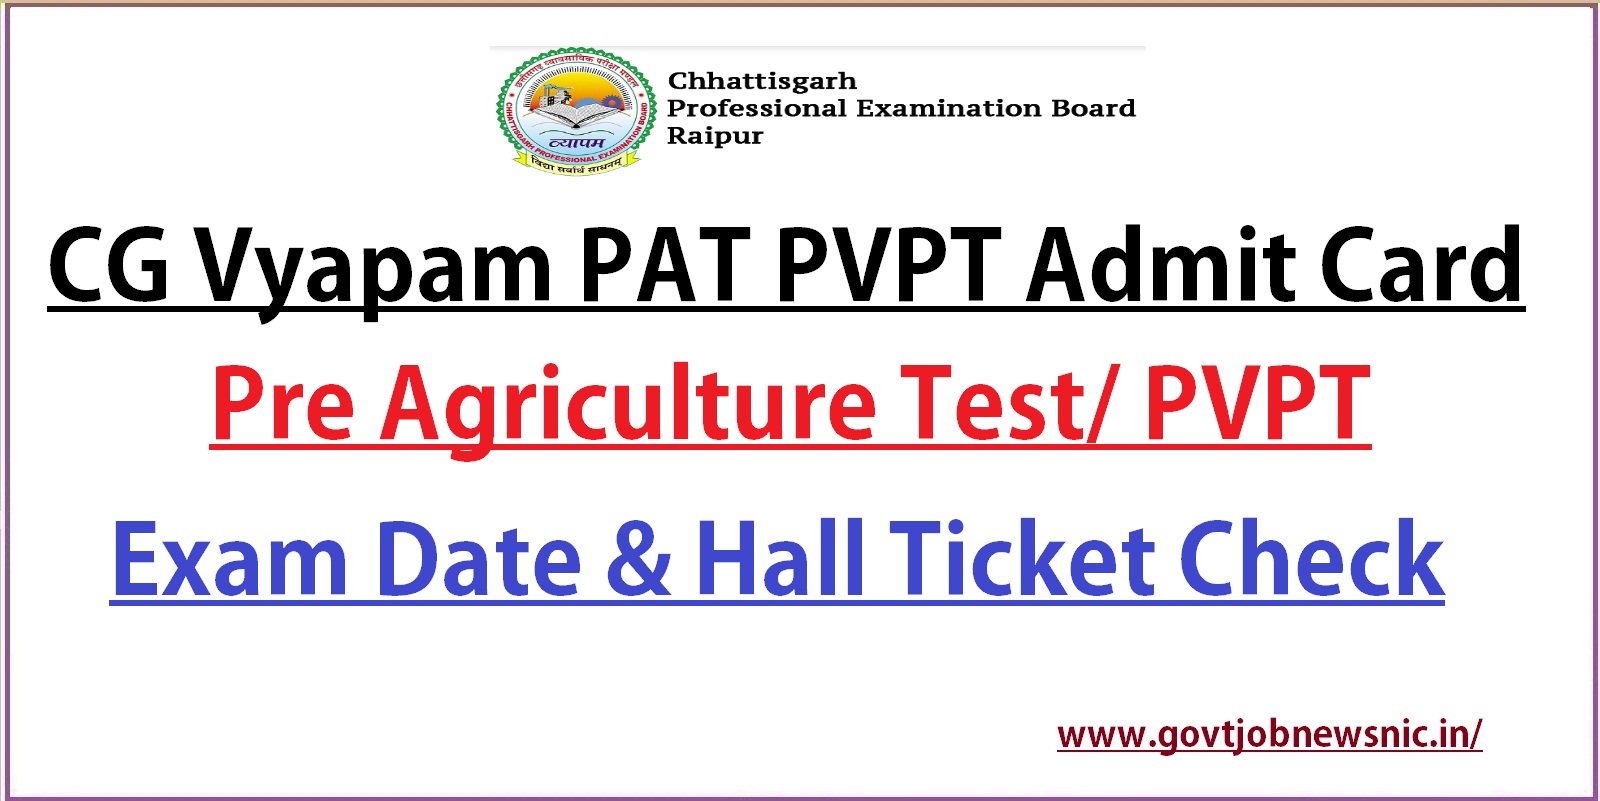 CG Vyapam PAT PVPT Admit Card 2021